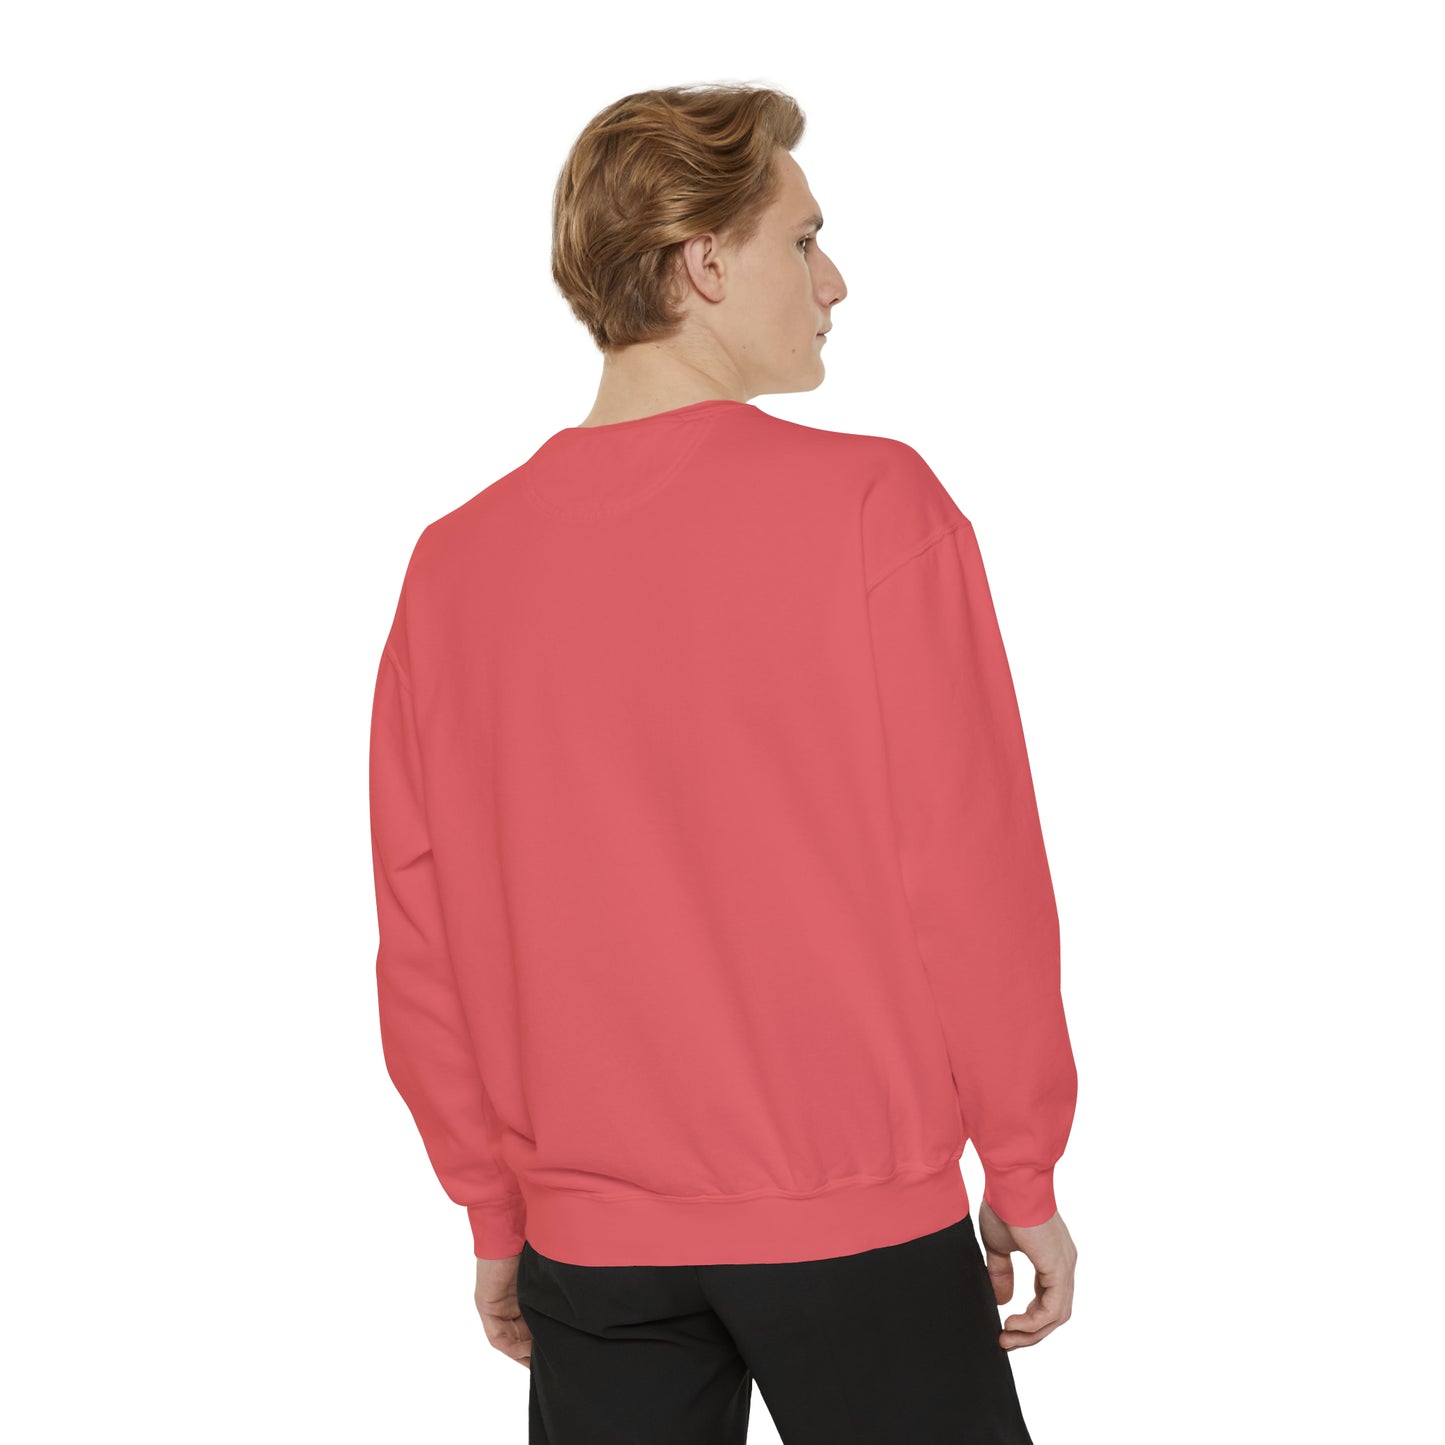 STANIELLE Garment-Dyed Sweatshirt